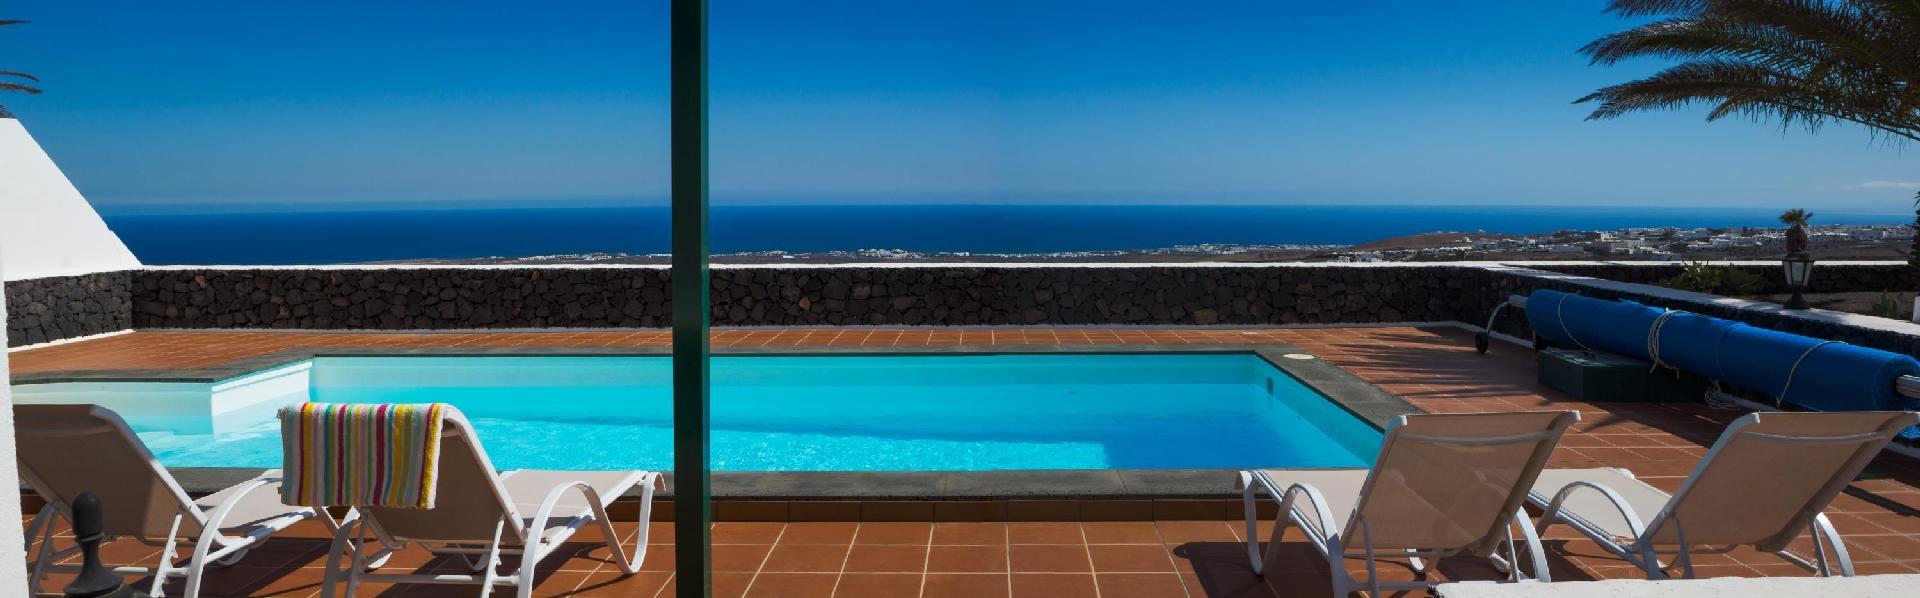 Apartment mit Meerblick in ruhiger Lage   Lanzarote